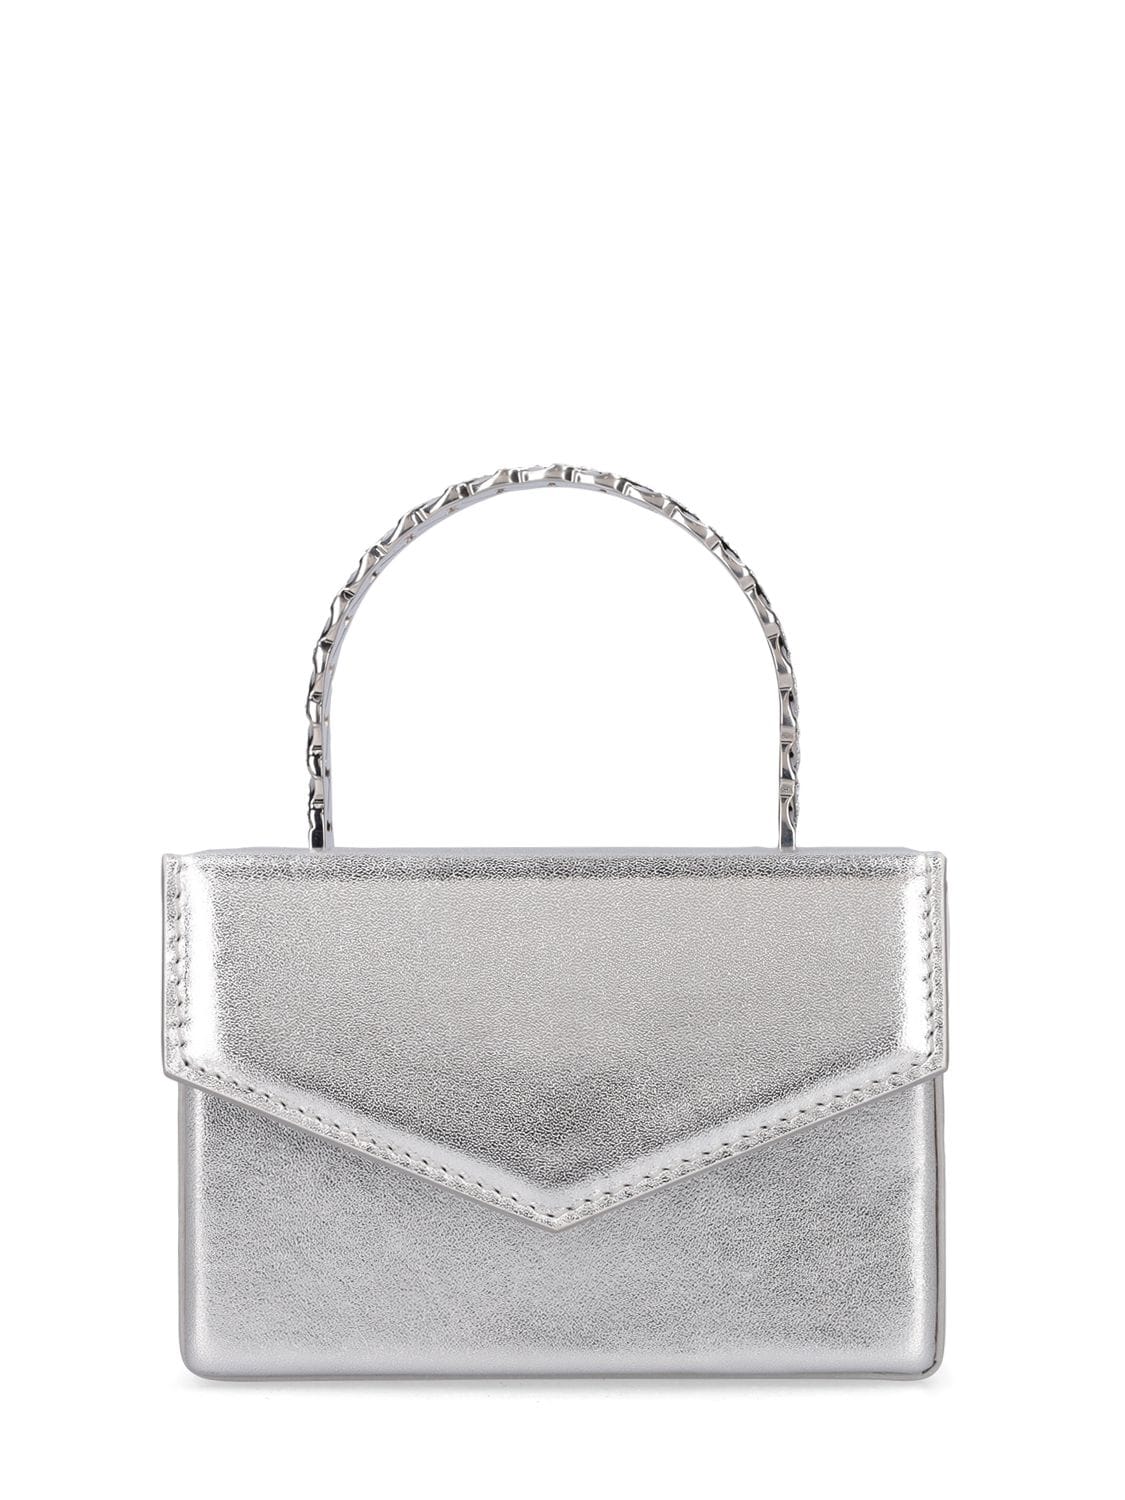 Amina Muaddi Metallic Superamini Pernille Bag In Silver | ModeSens